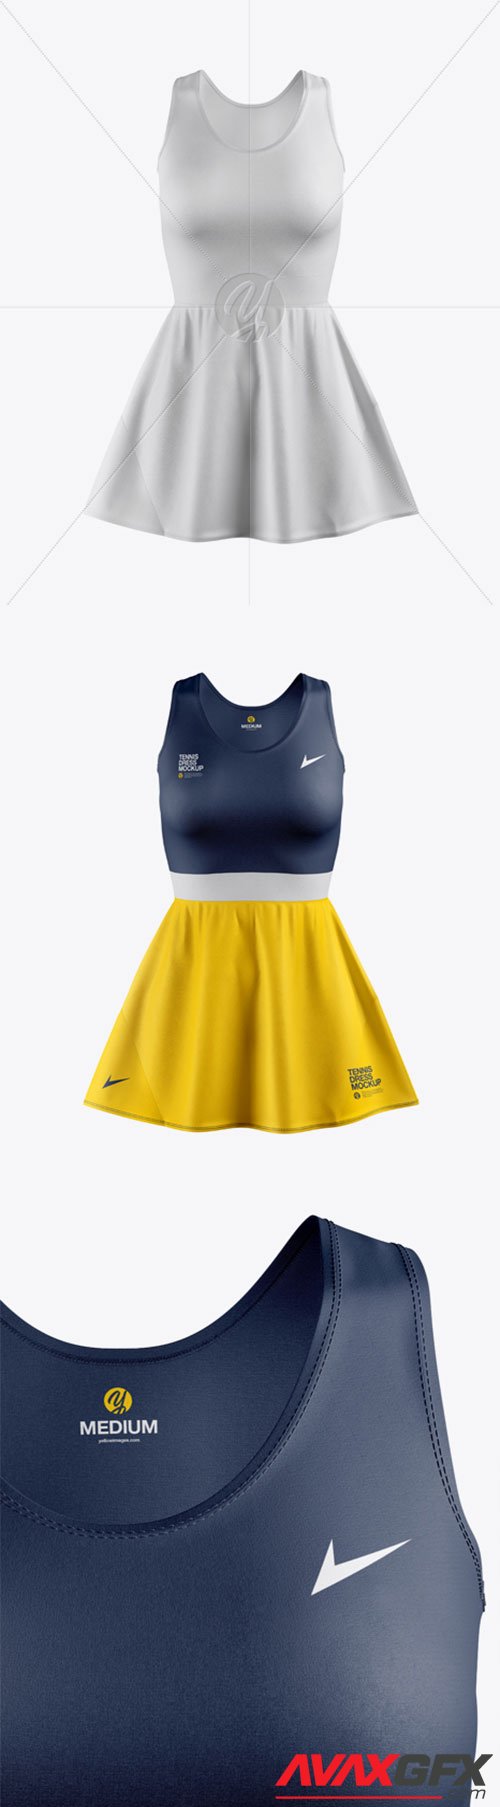 Download Women's Tennis Dress Mockup 32099 » AVAXGFX - All ...